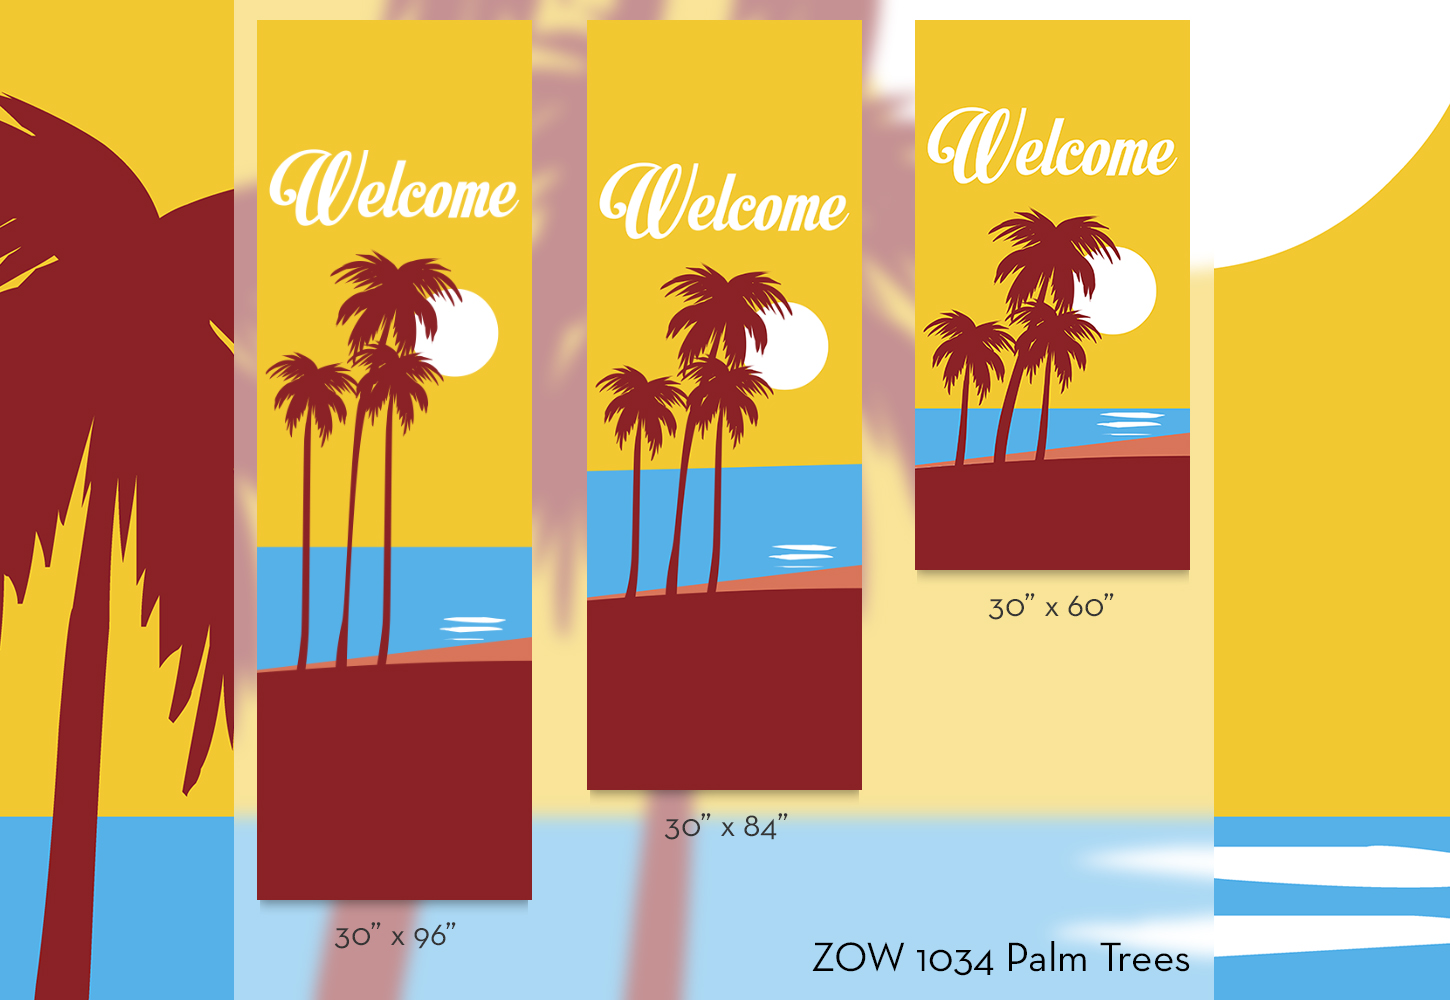 ZOW 1034 Palm Trees